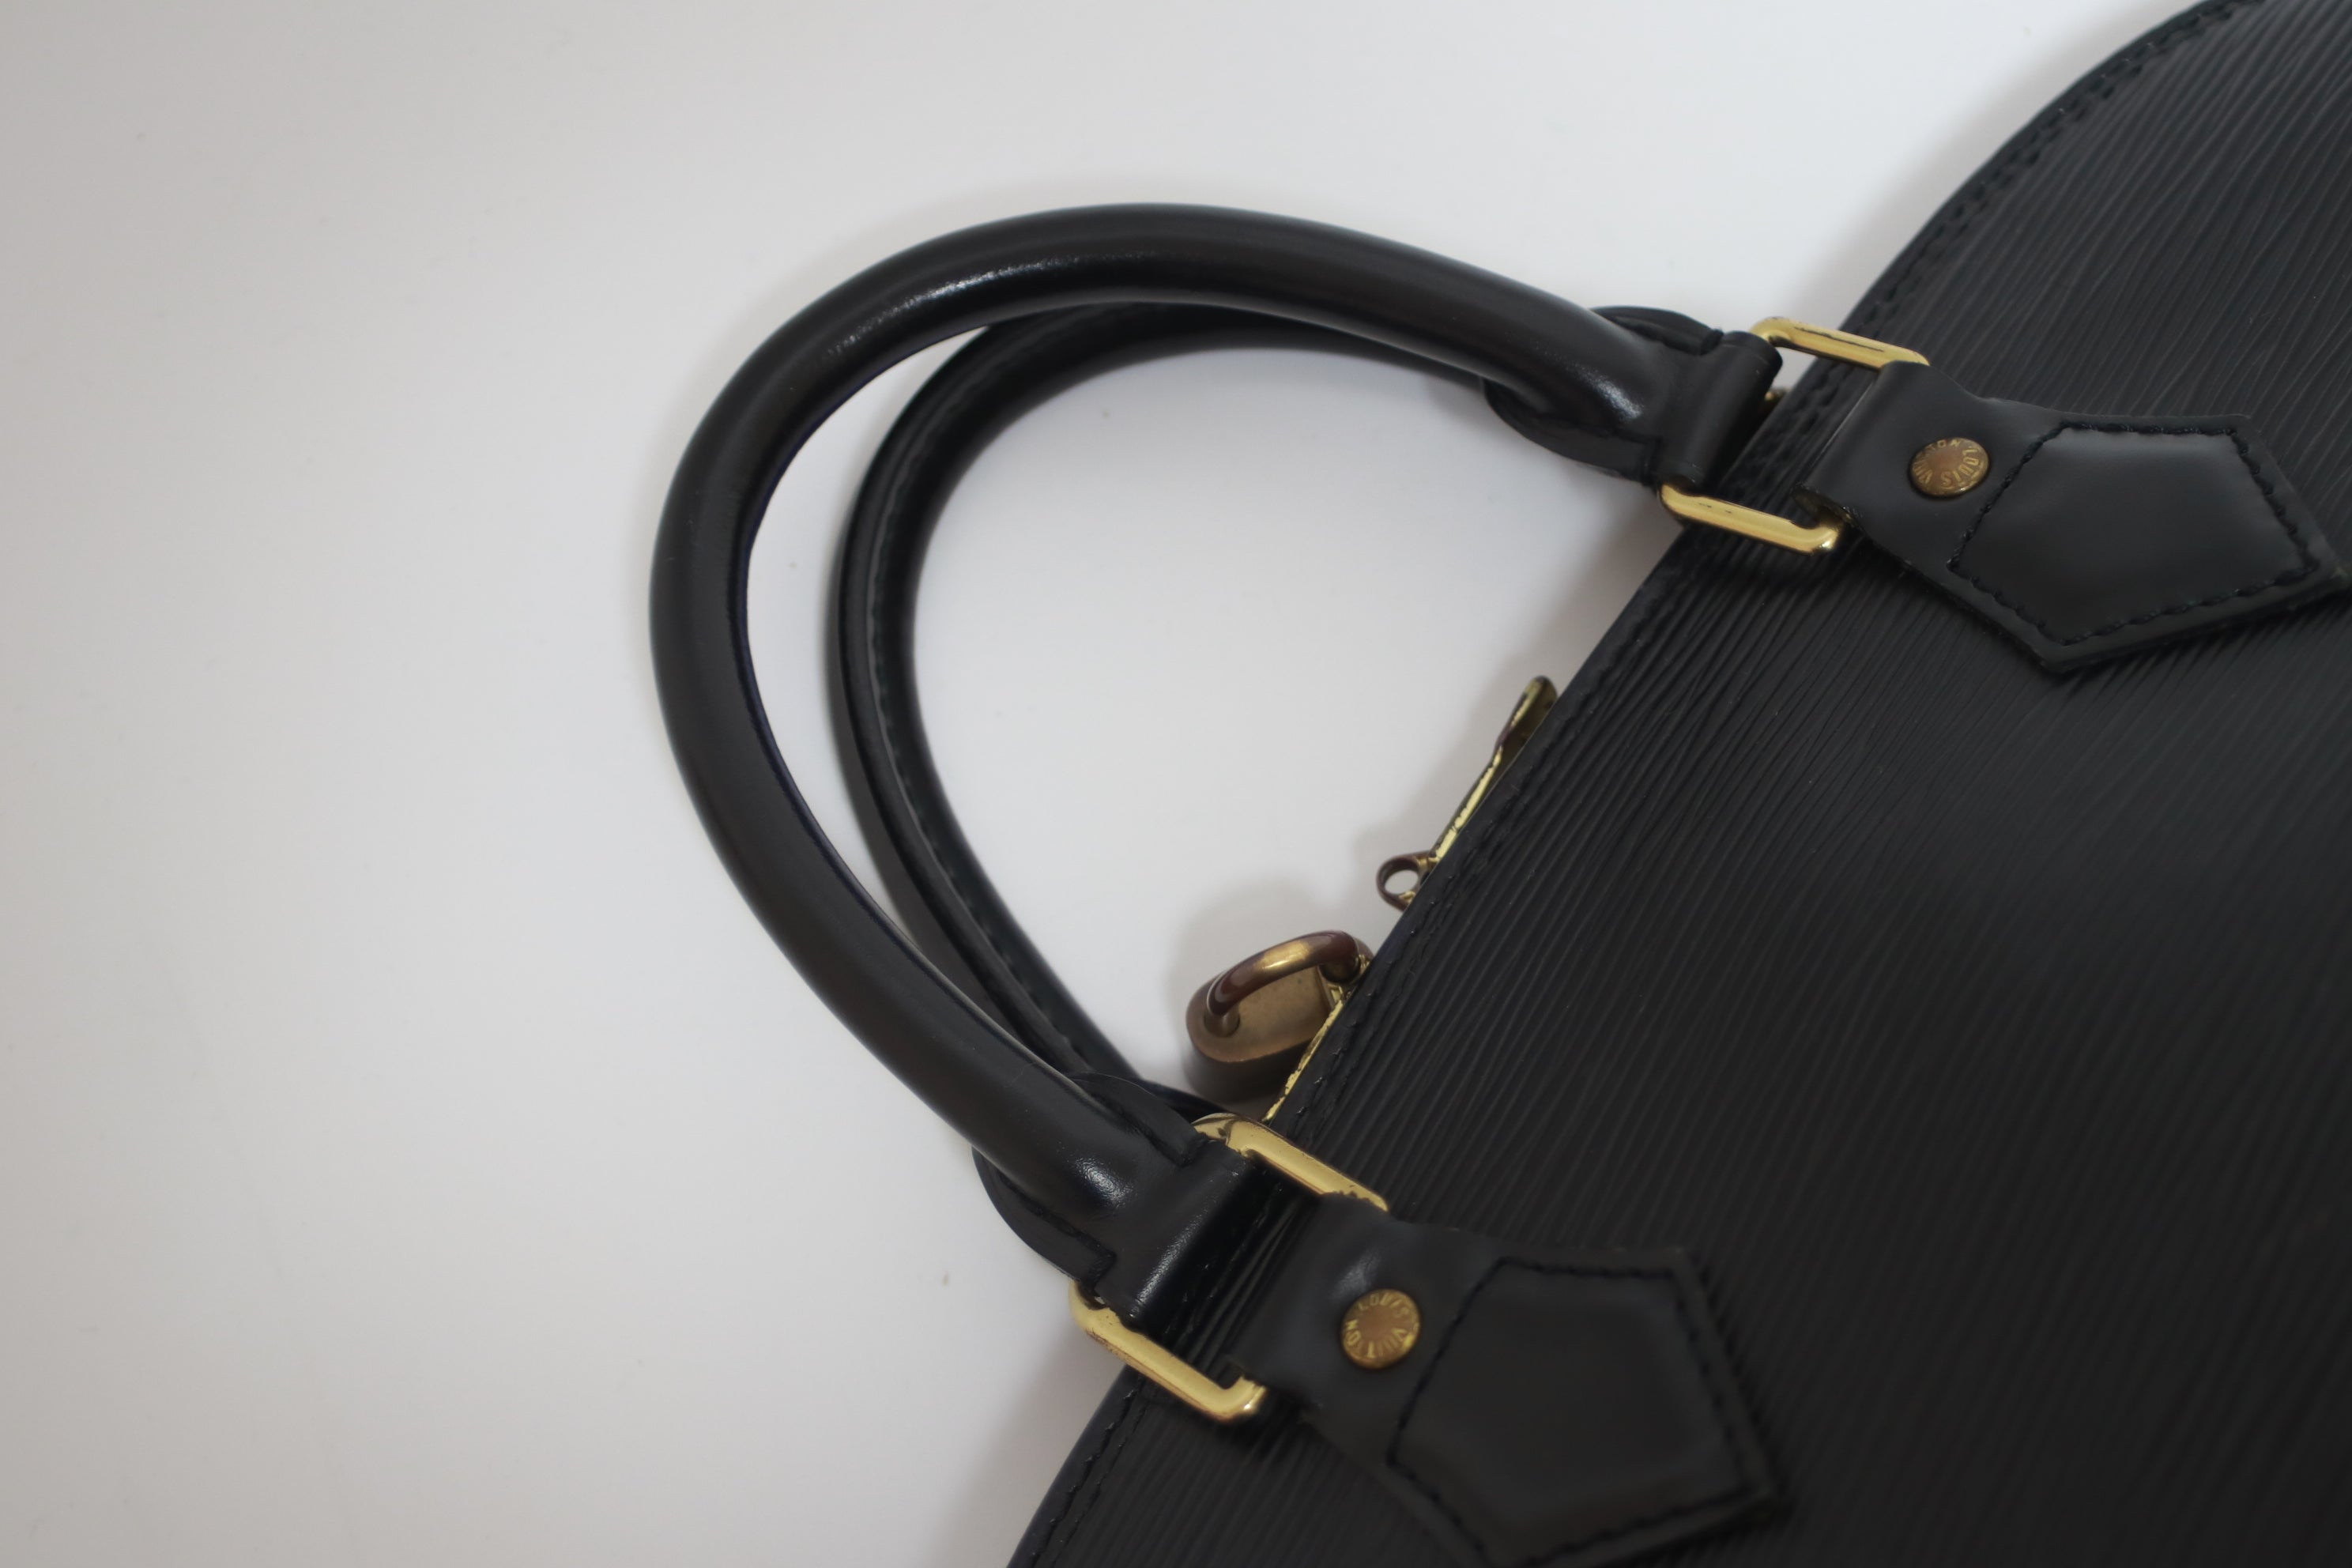 Louis Vuitton Alma PM Epi Leather Handbag Black Used (7977)